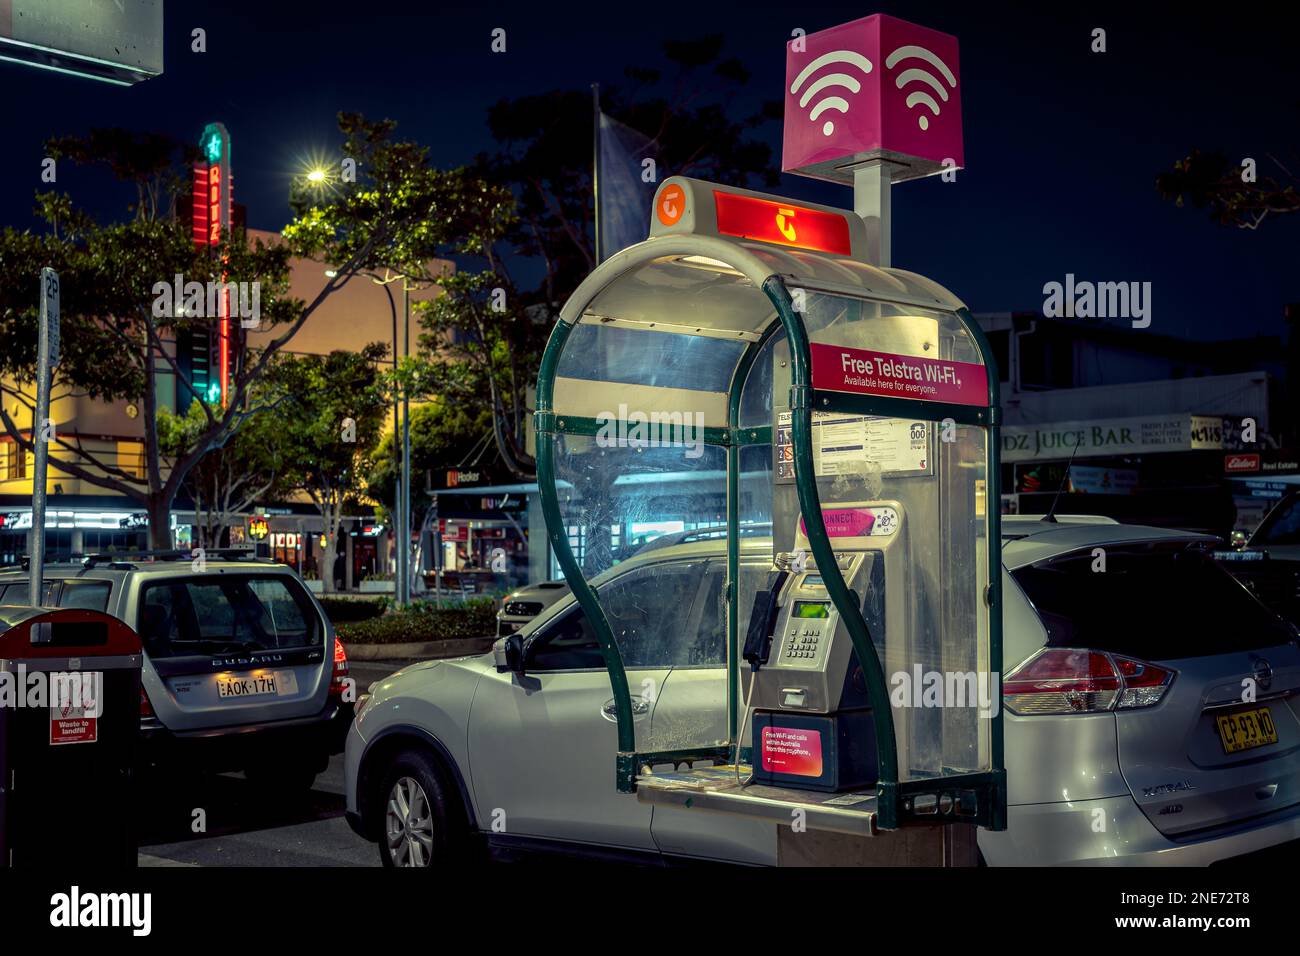 Port Macquarie, New South Wales, Australia -Telstra landline phone booth illuminated at night Stock Photo